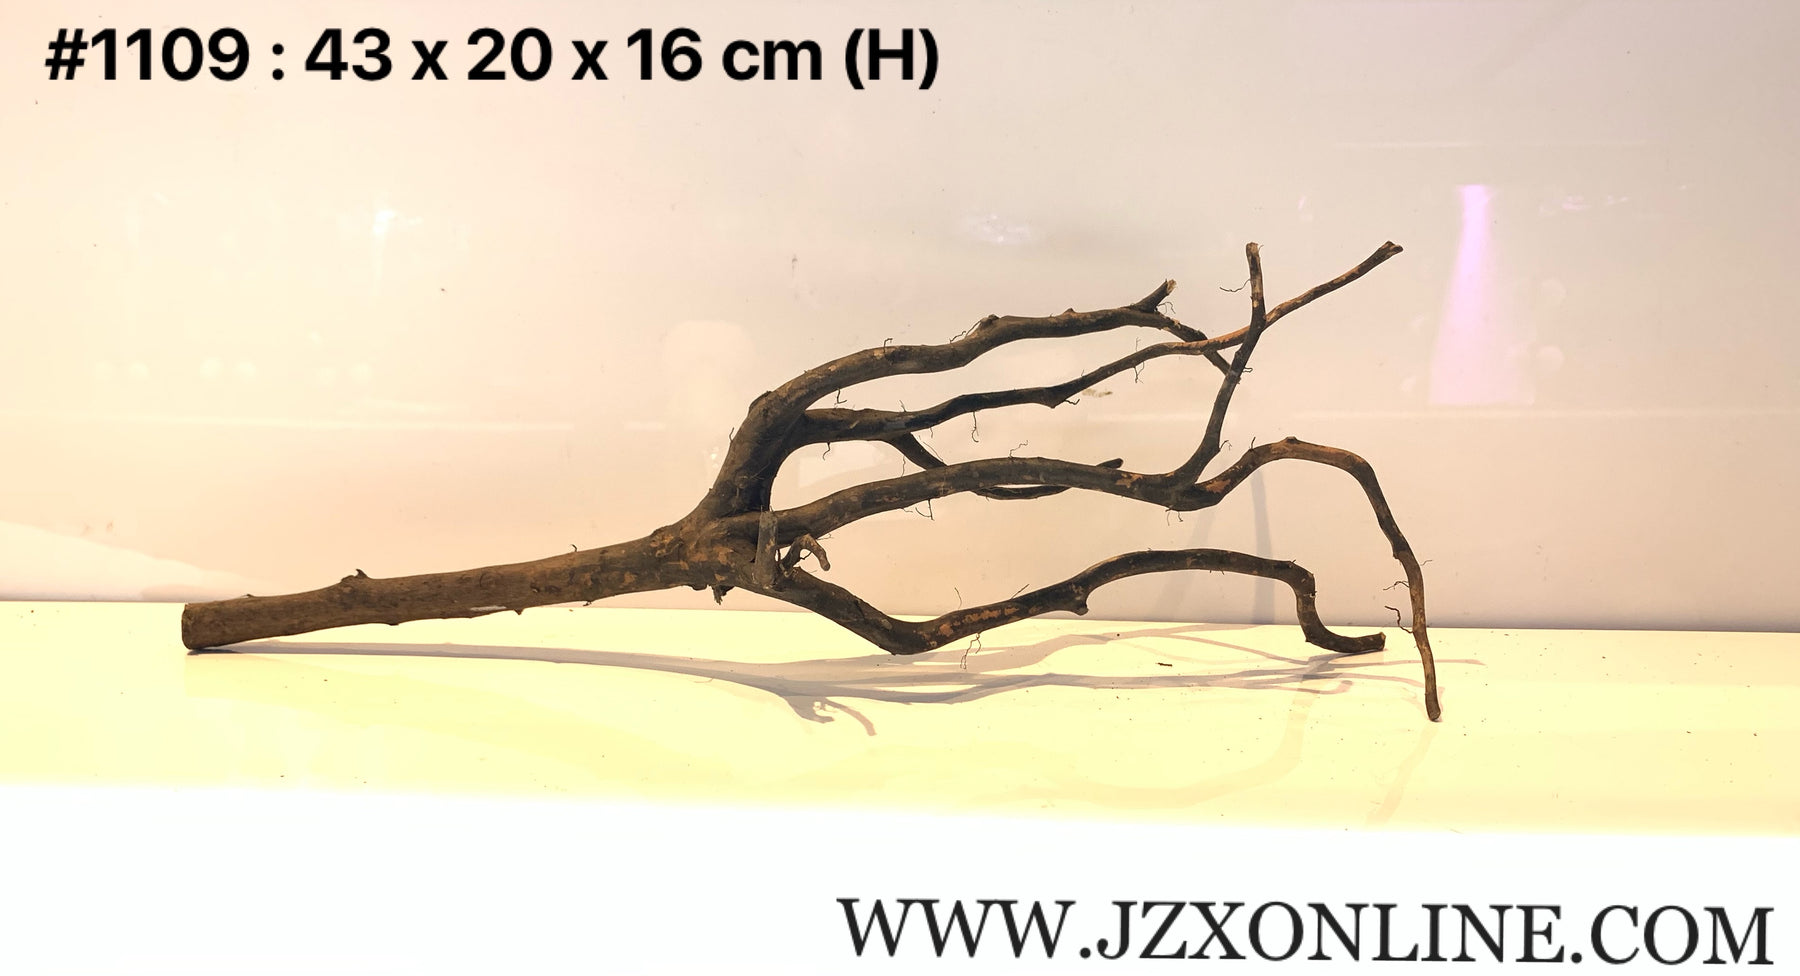 Driftwood #1109 - 43 x 20 x 16cm(H)